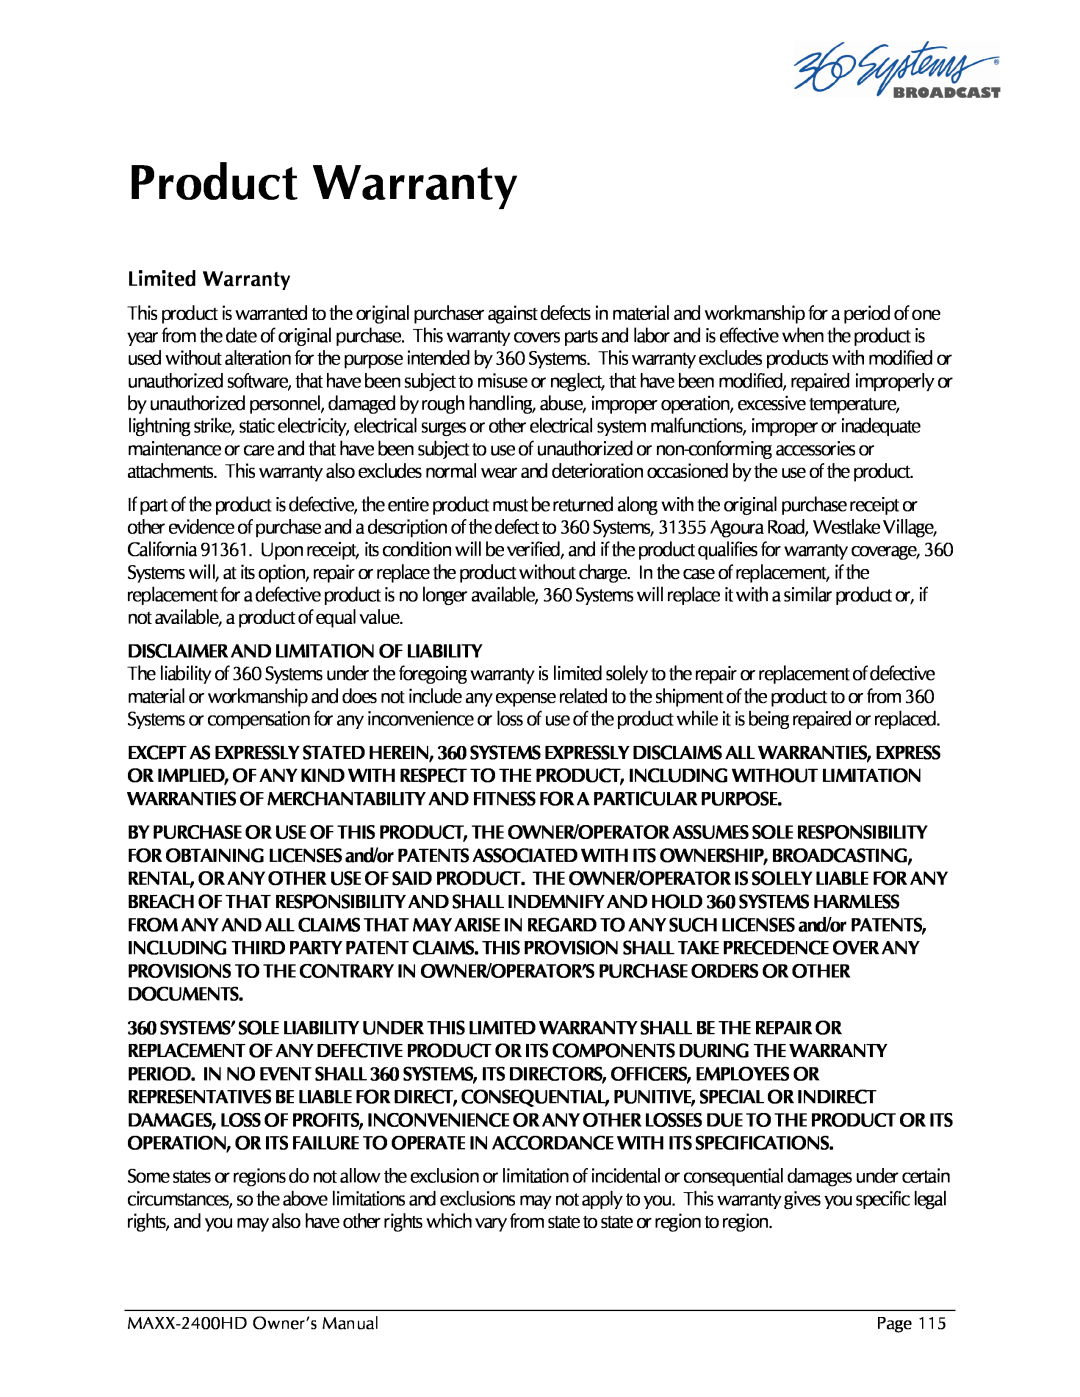 Maxxsonics MAXX-2400HD manual Product Warranty, Limited Warranty 